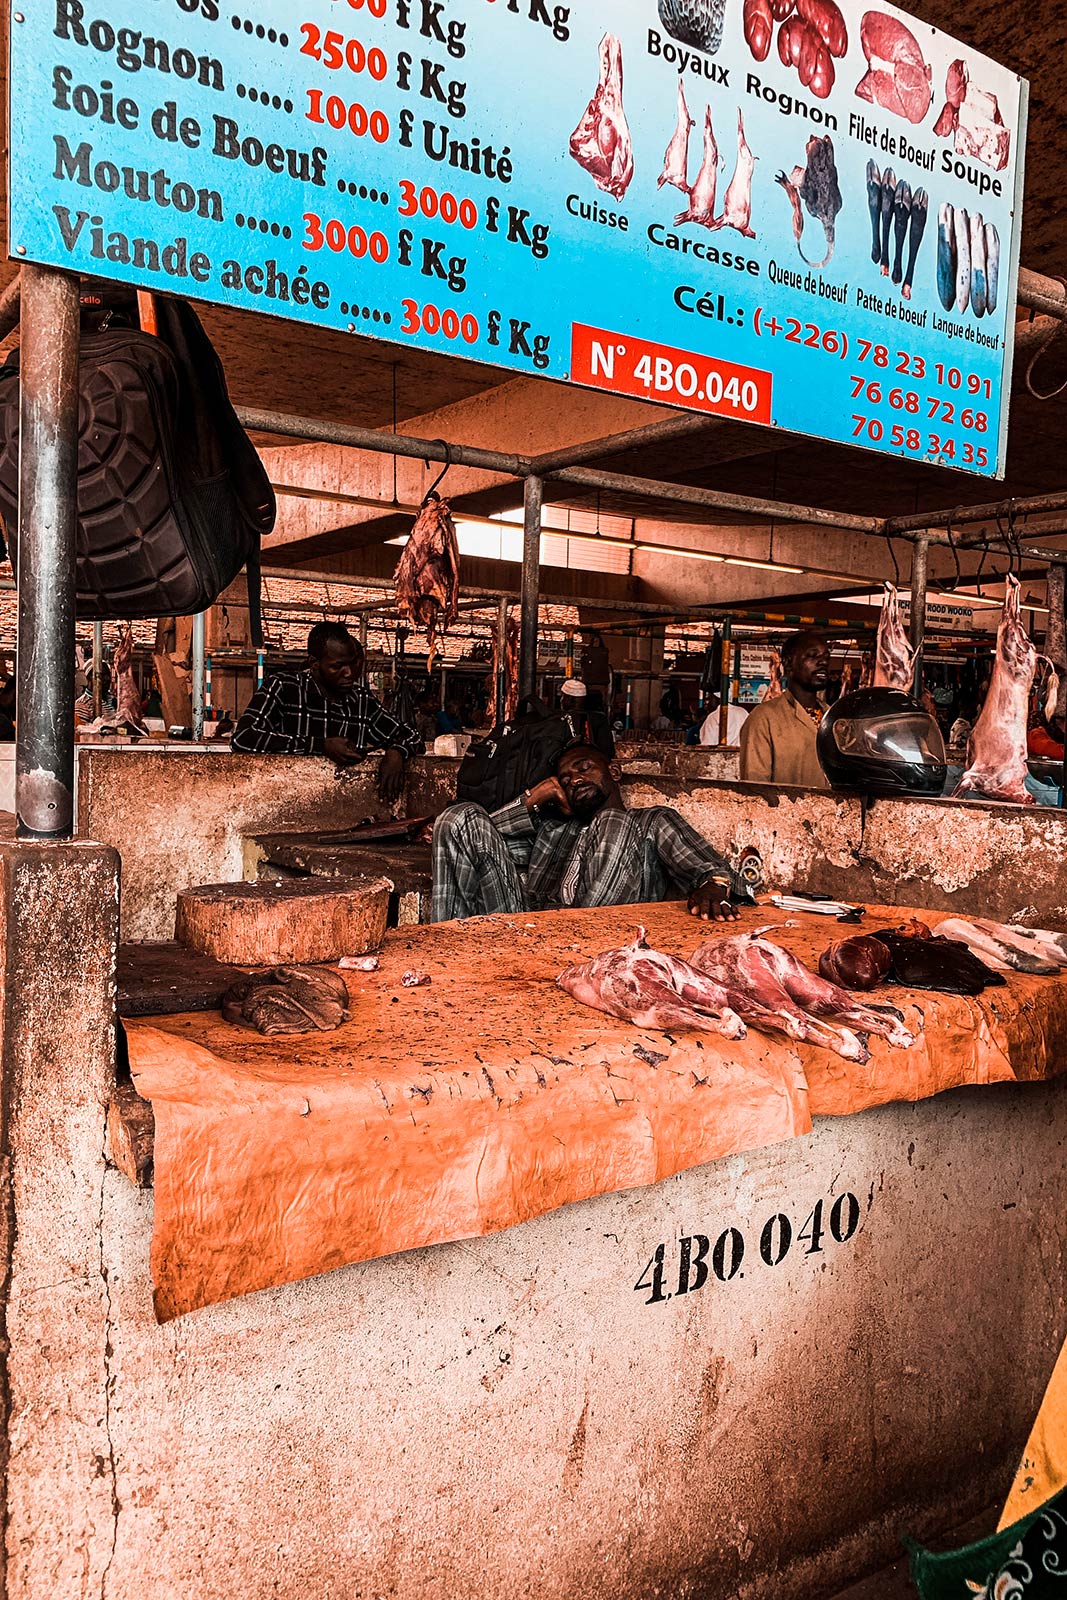 Butcher asleep in his stall at market in Ouagadougou, Burkina Faso. The most horrible zoo